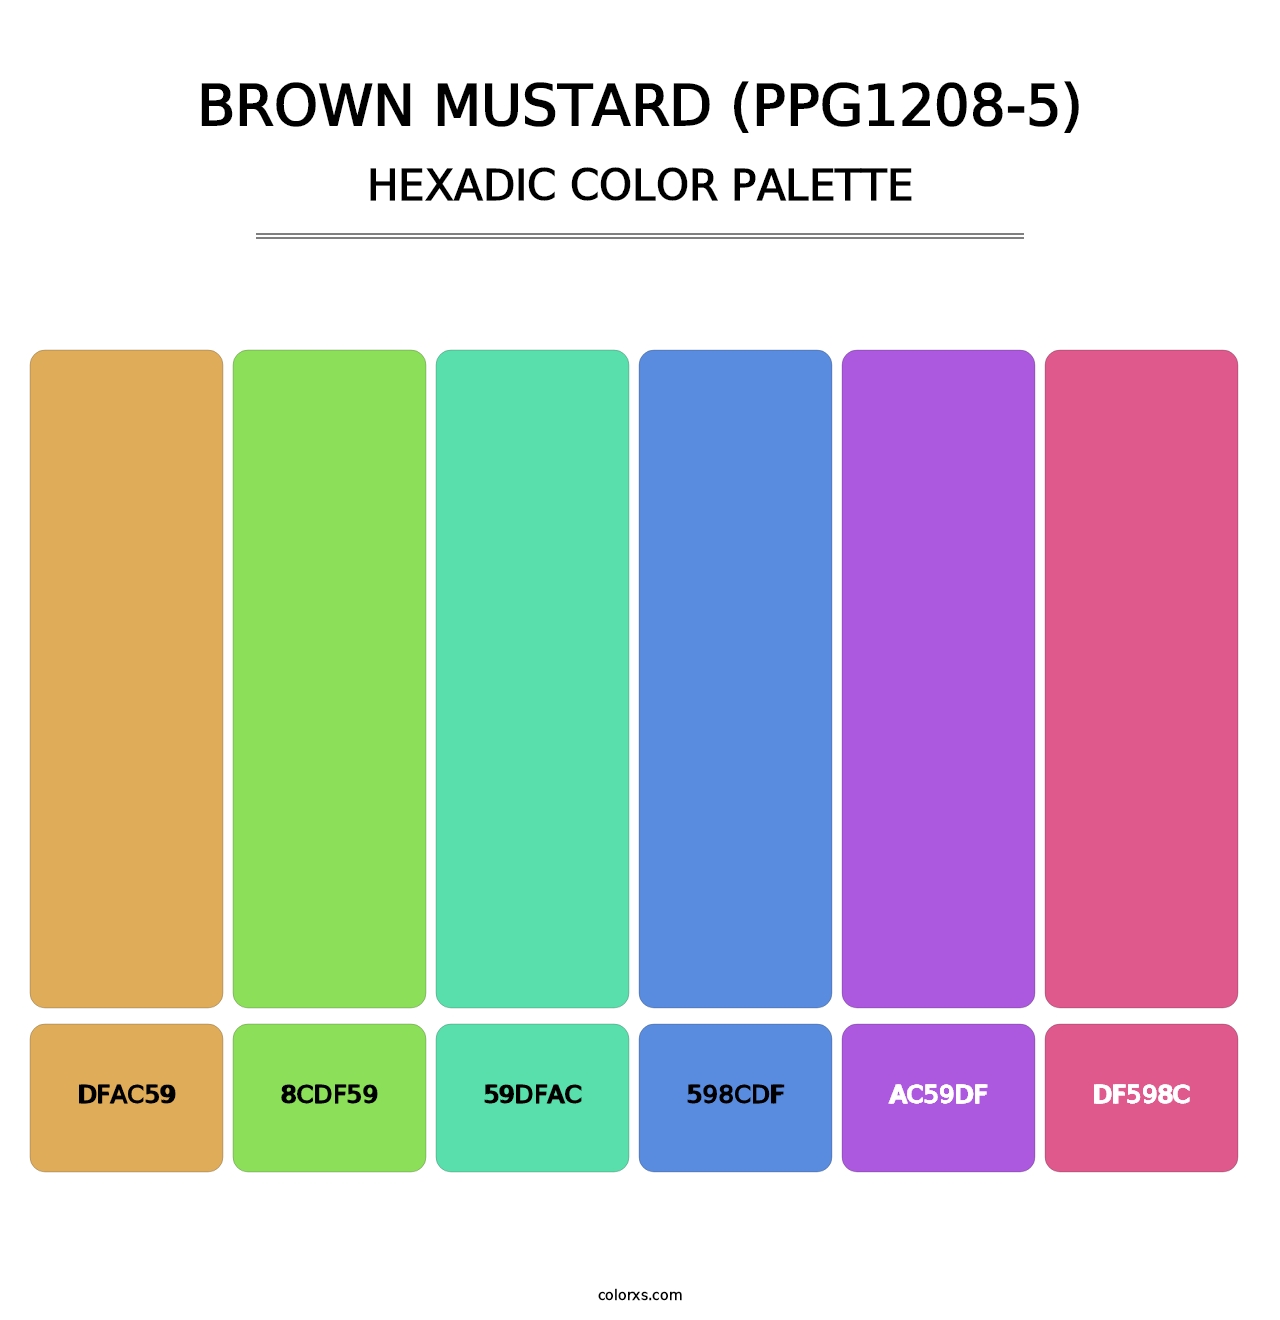 Brown Mustard (PPG1208-5) - Hexadic Color Palette